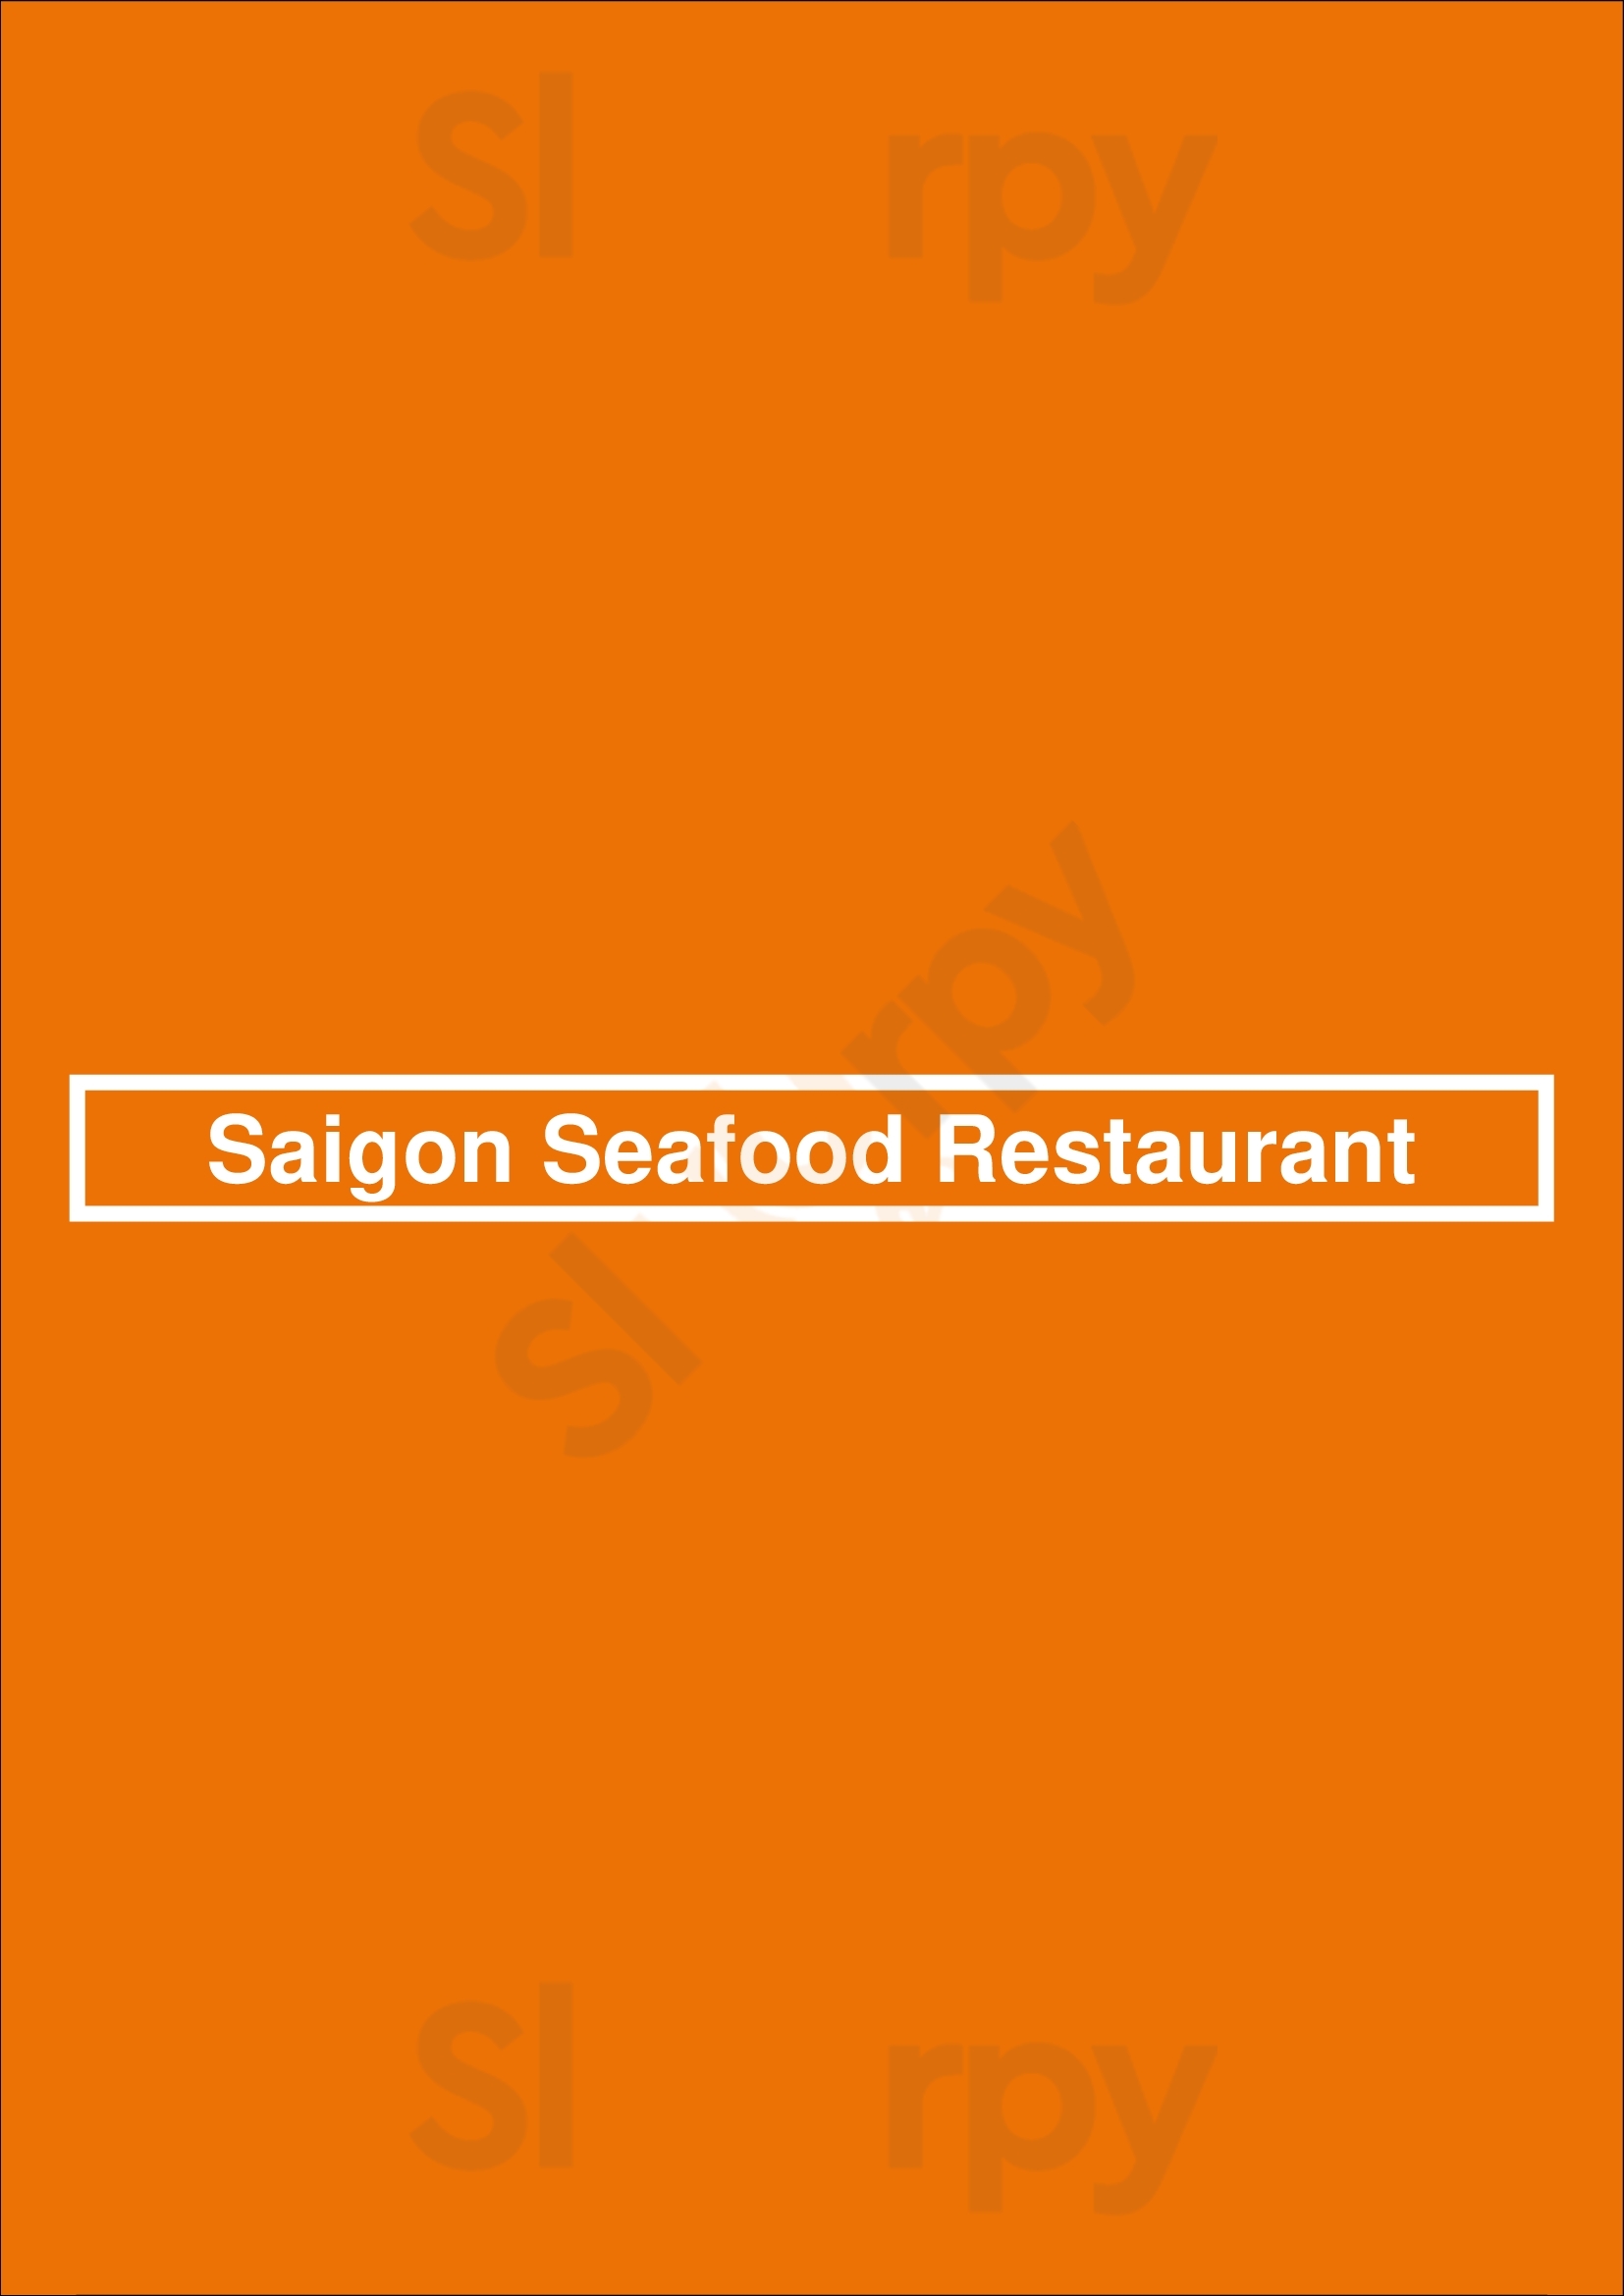 Saigon Seafood Restaurant Boston Menu - 1